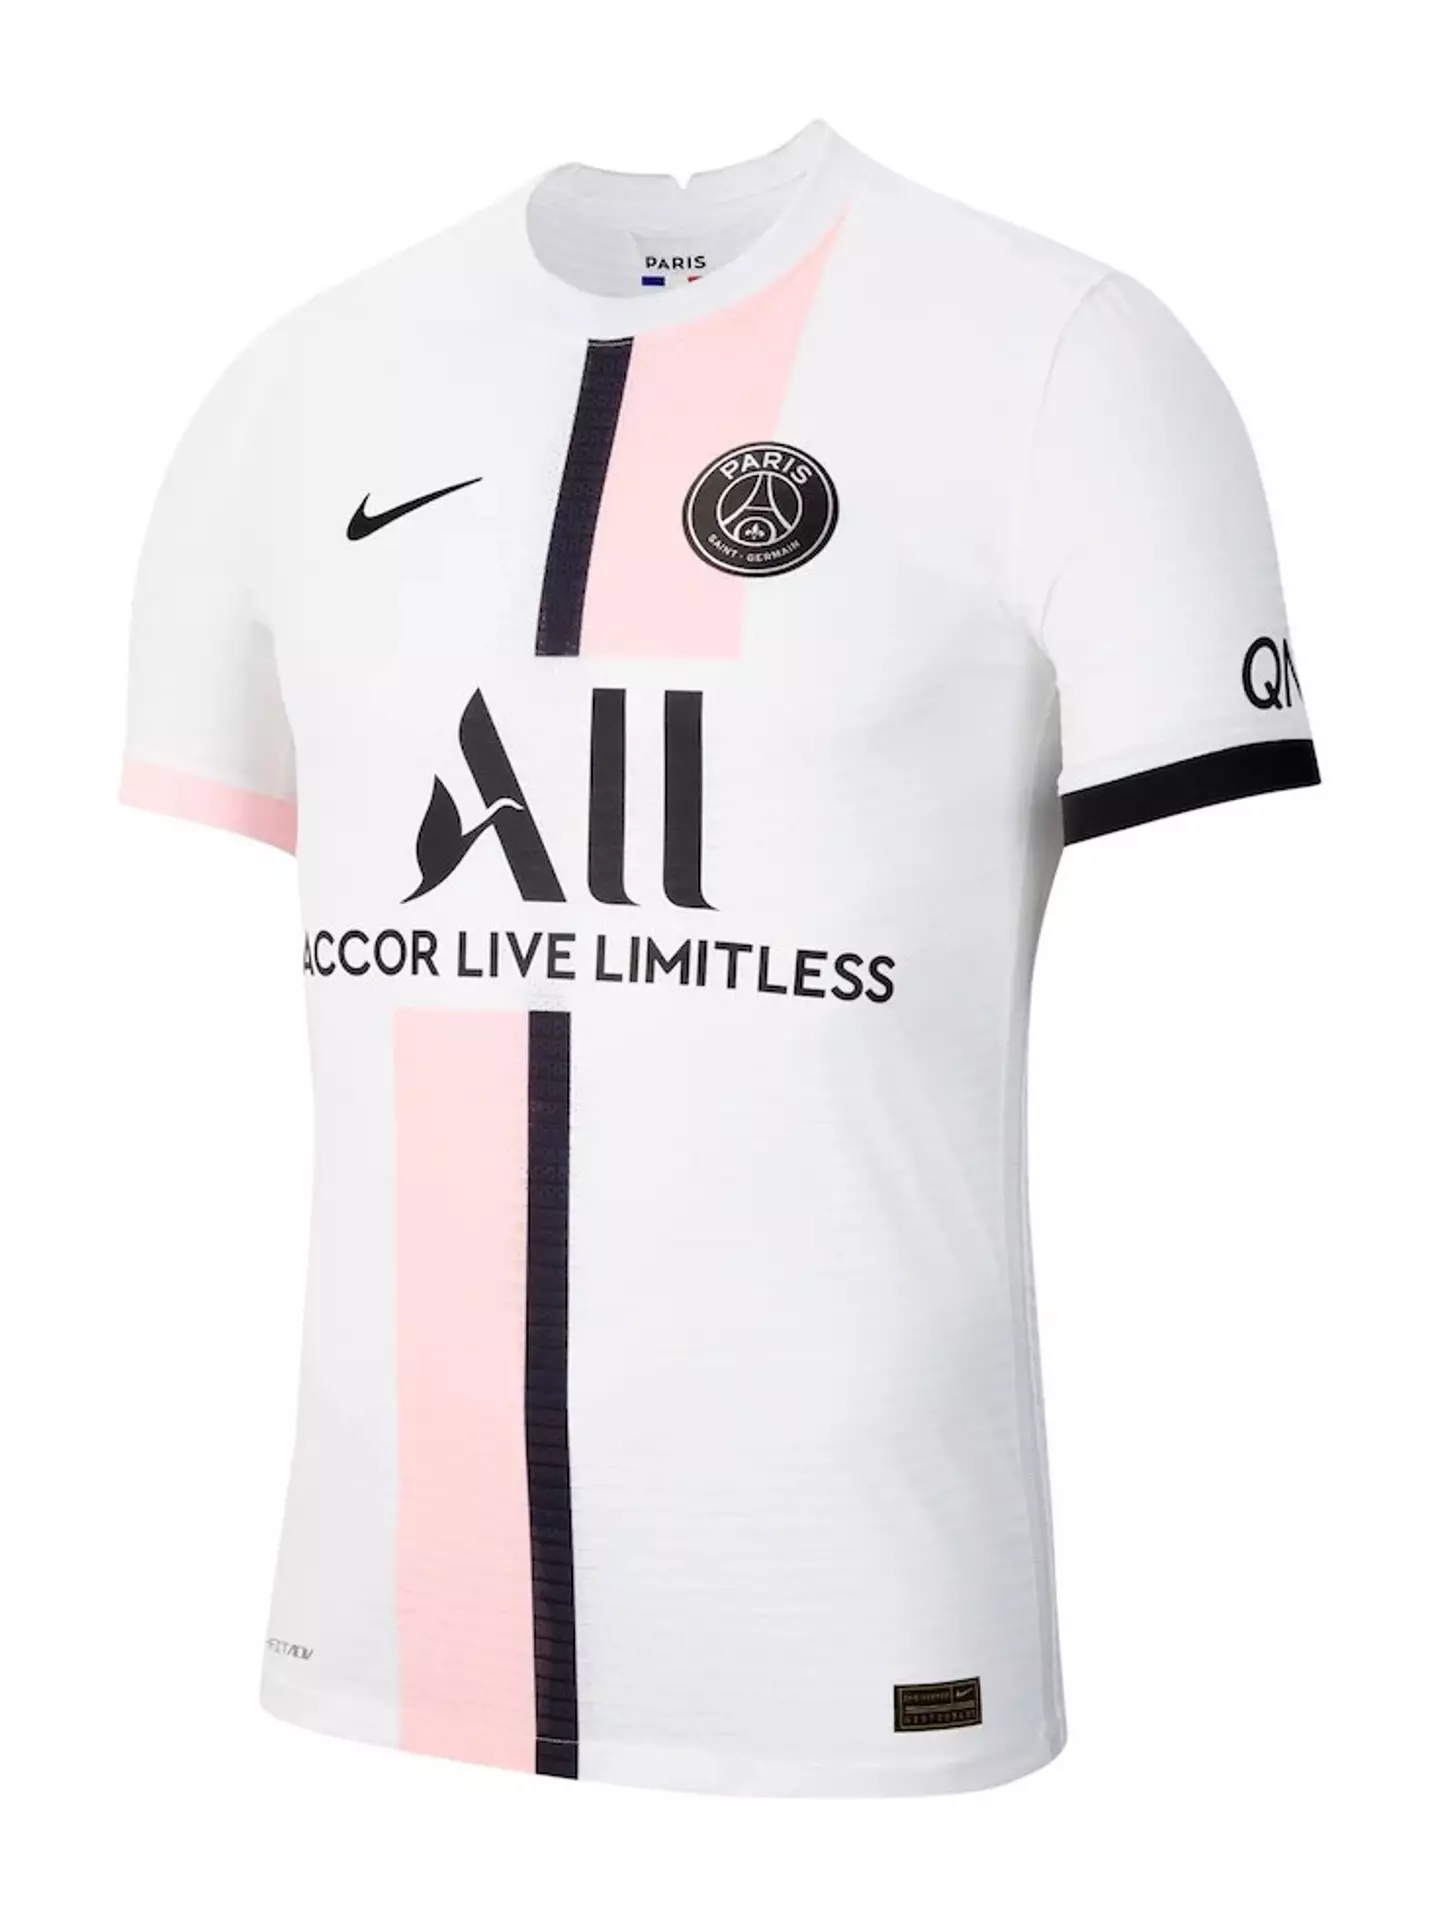 Last season's PSG away kit, which was also white.